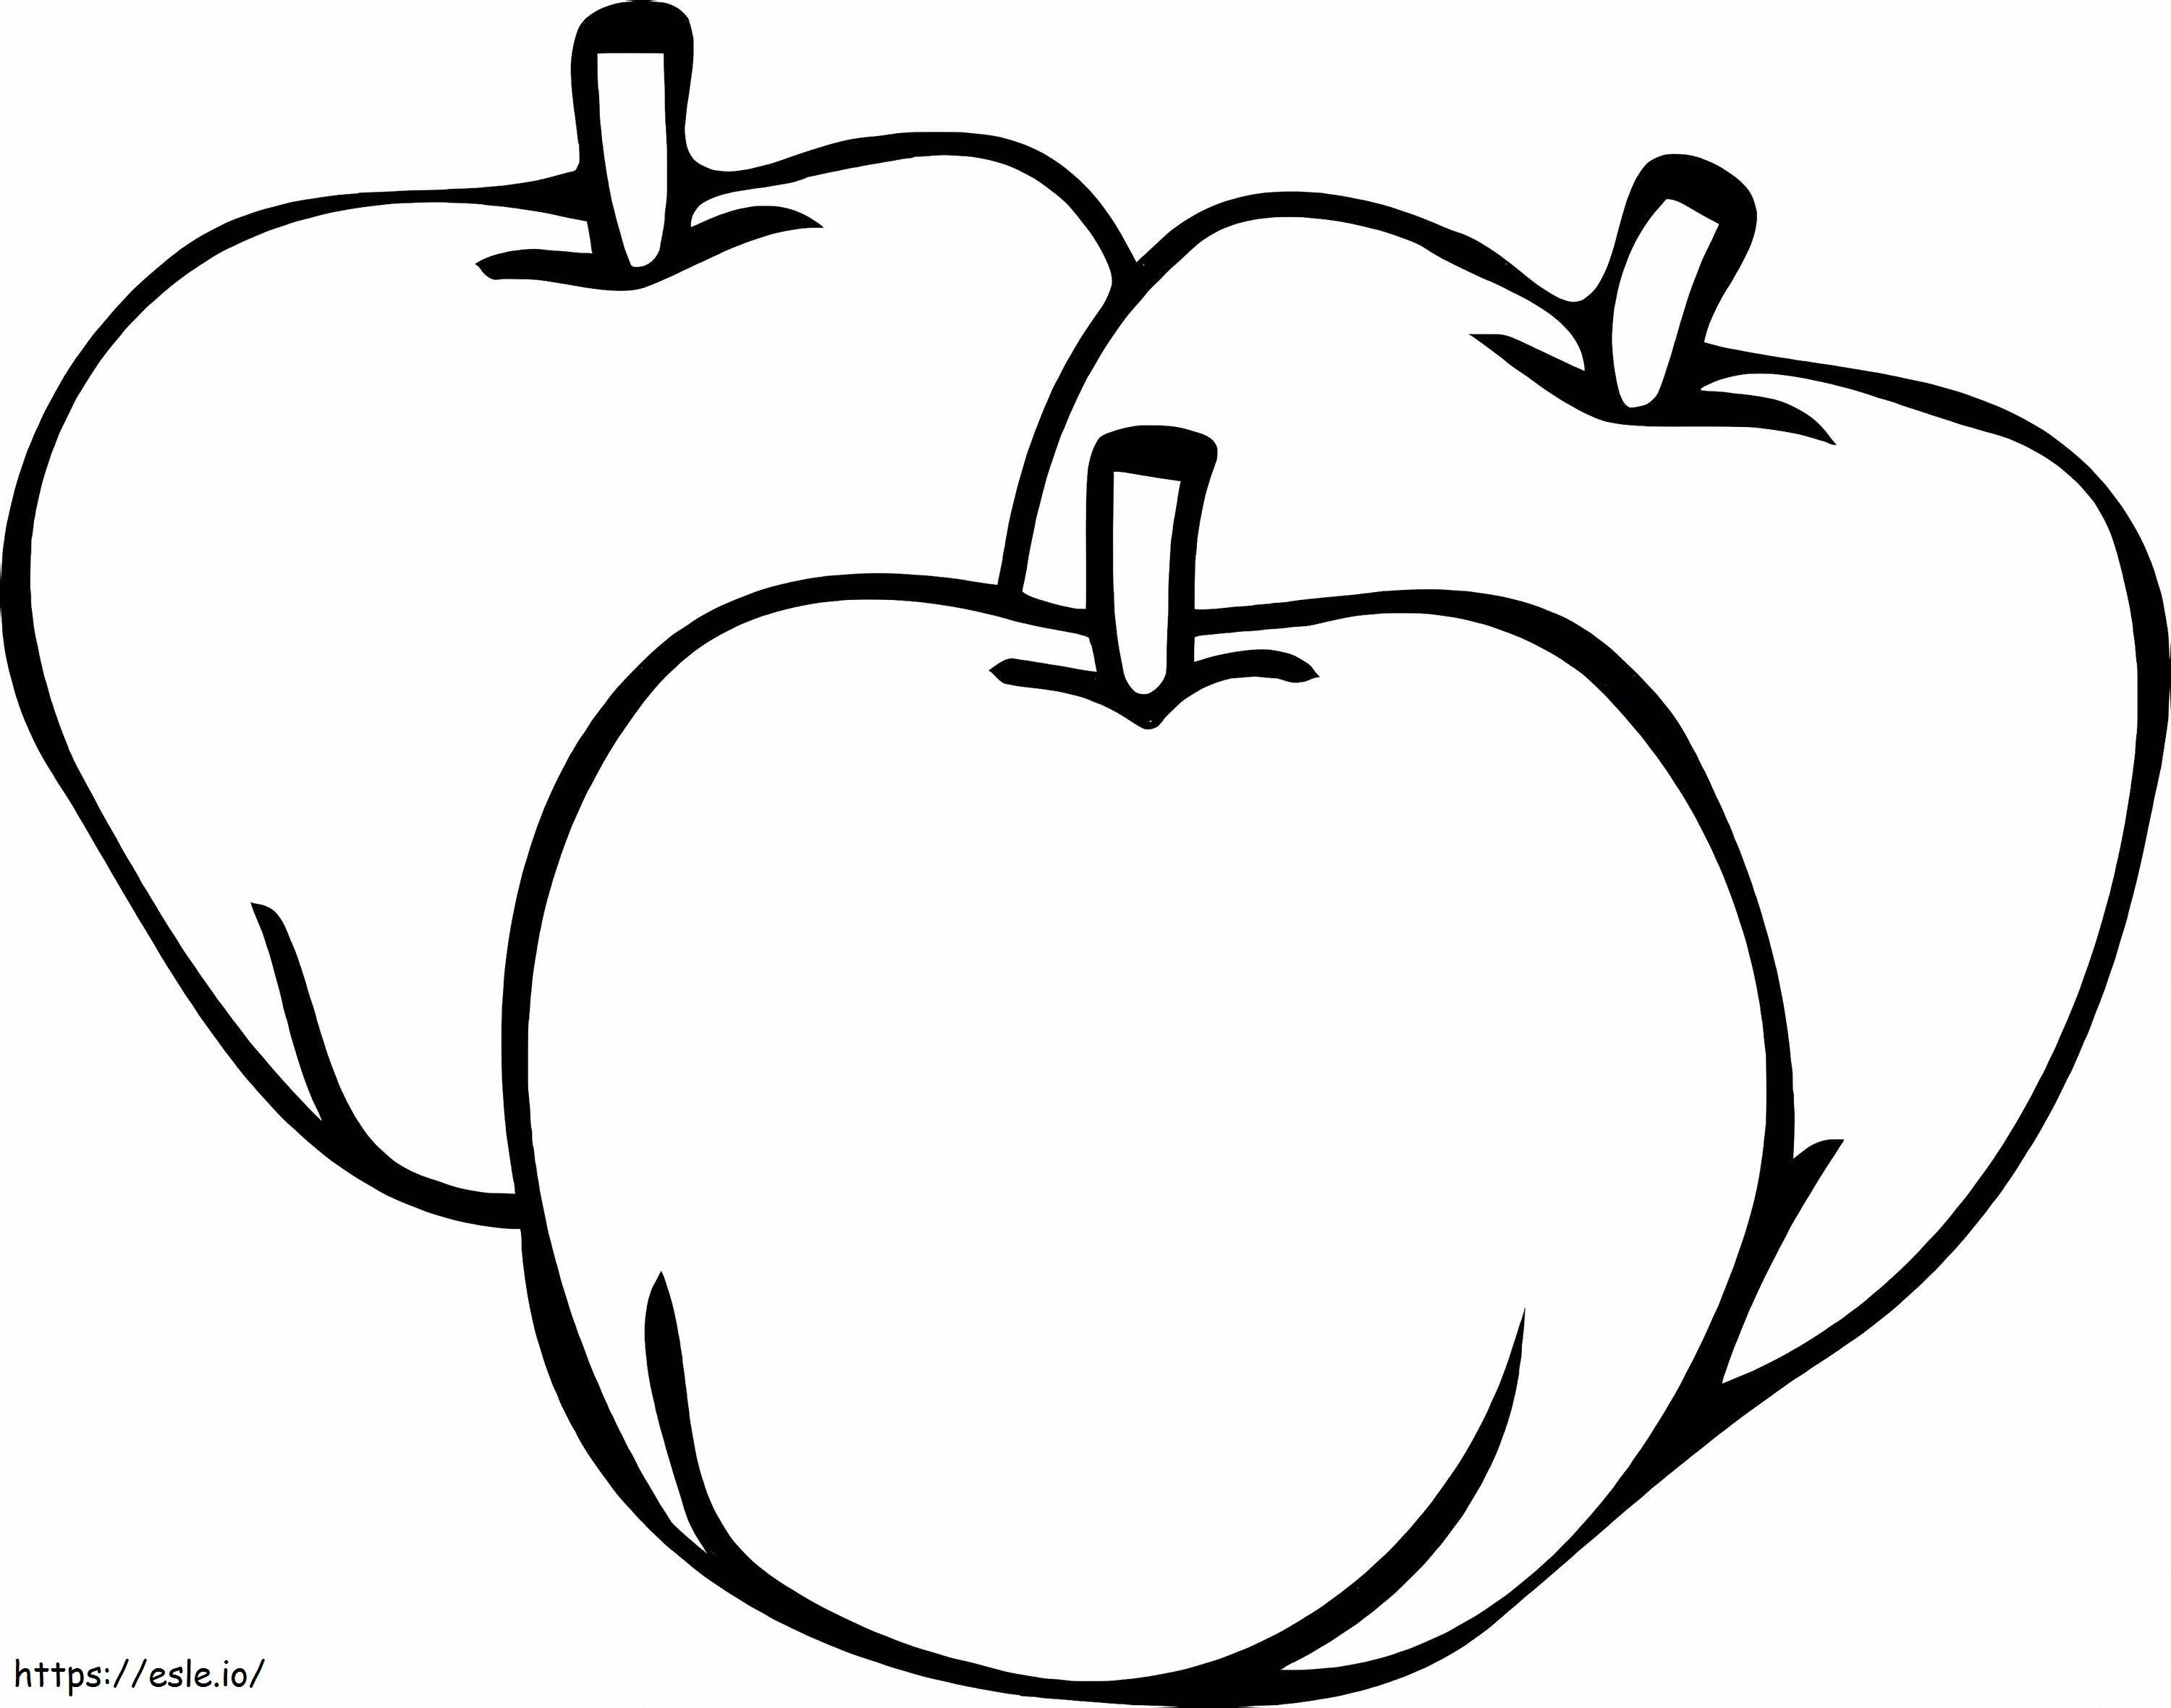 üç elma çizimi boyama